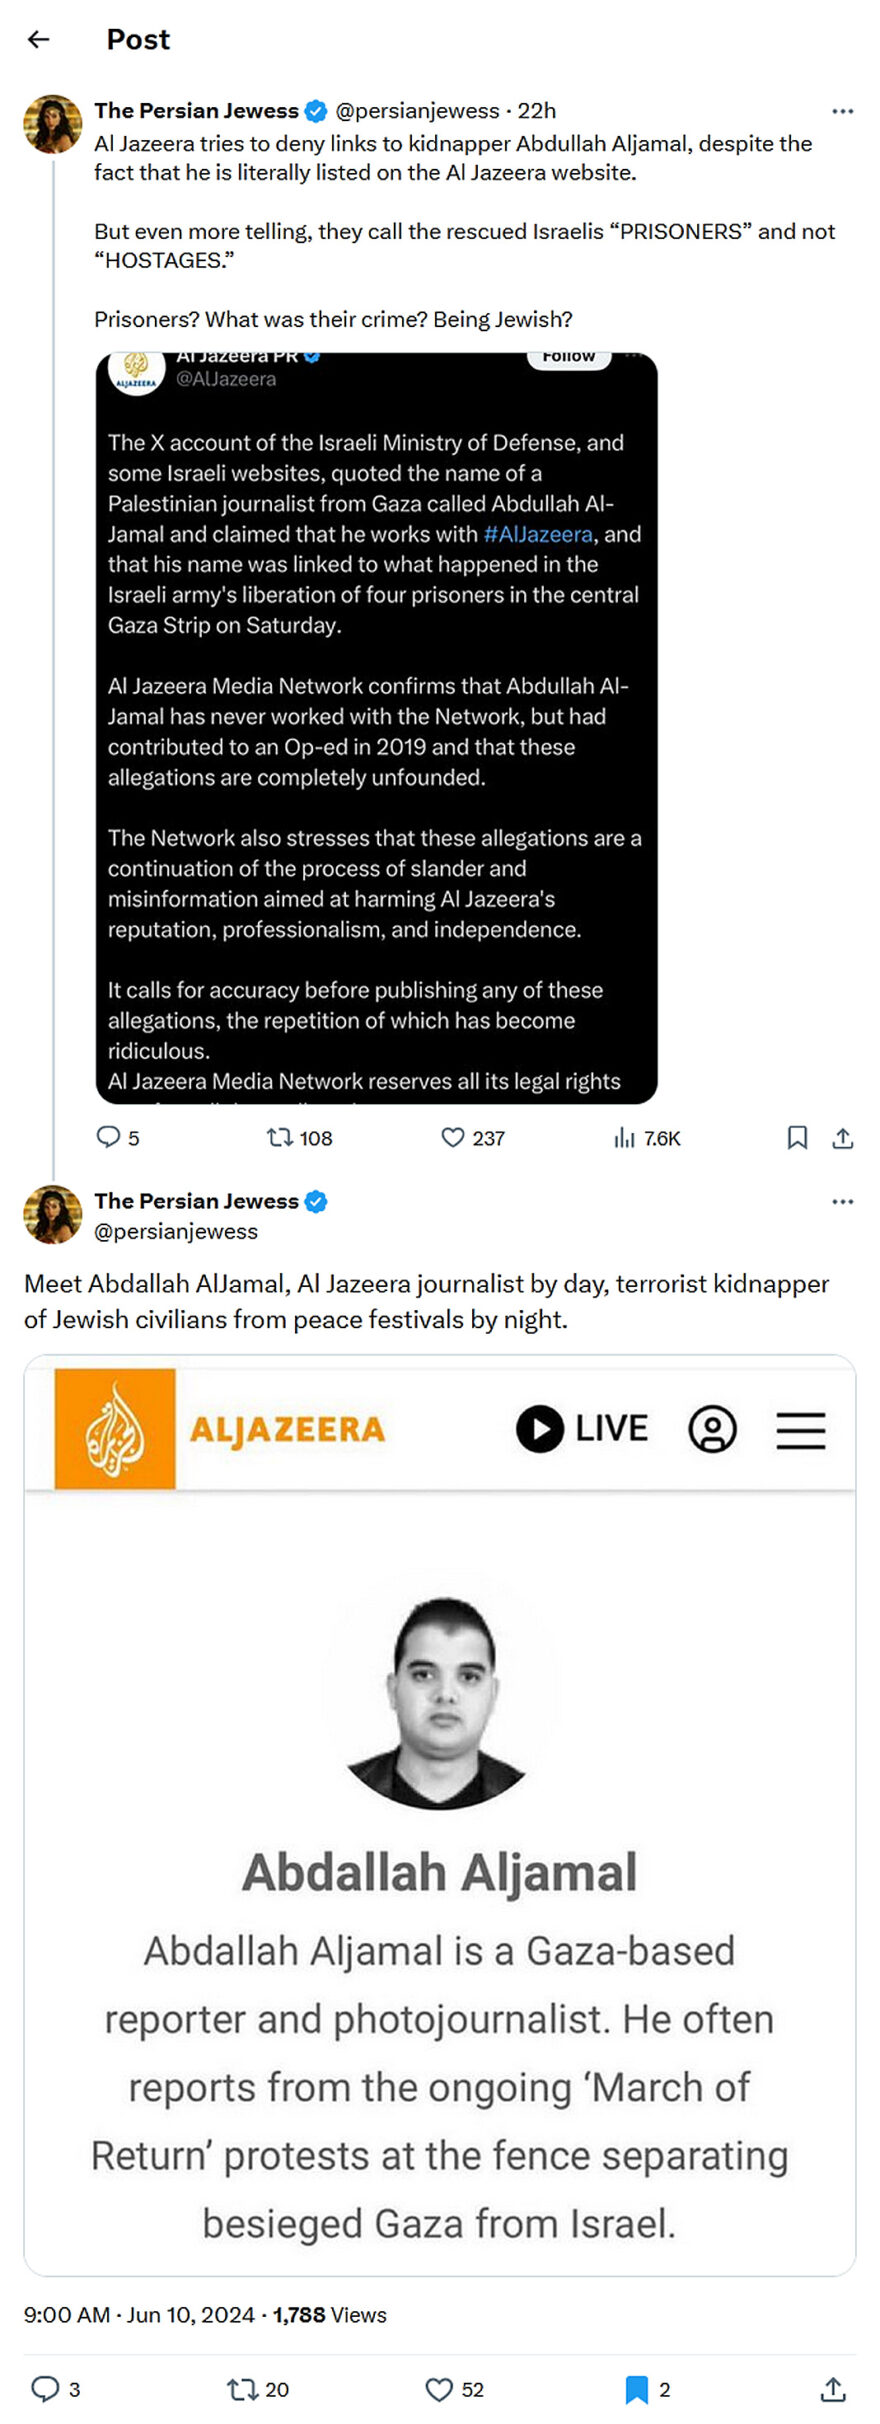 The Persian Jewess-tweet-10June2024-Al Jazeera tries to deny links to kidnapper Abdullah Aljamal